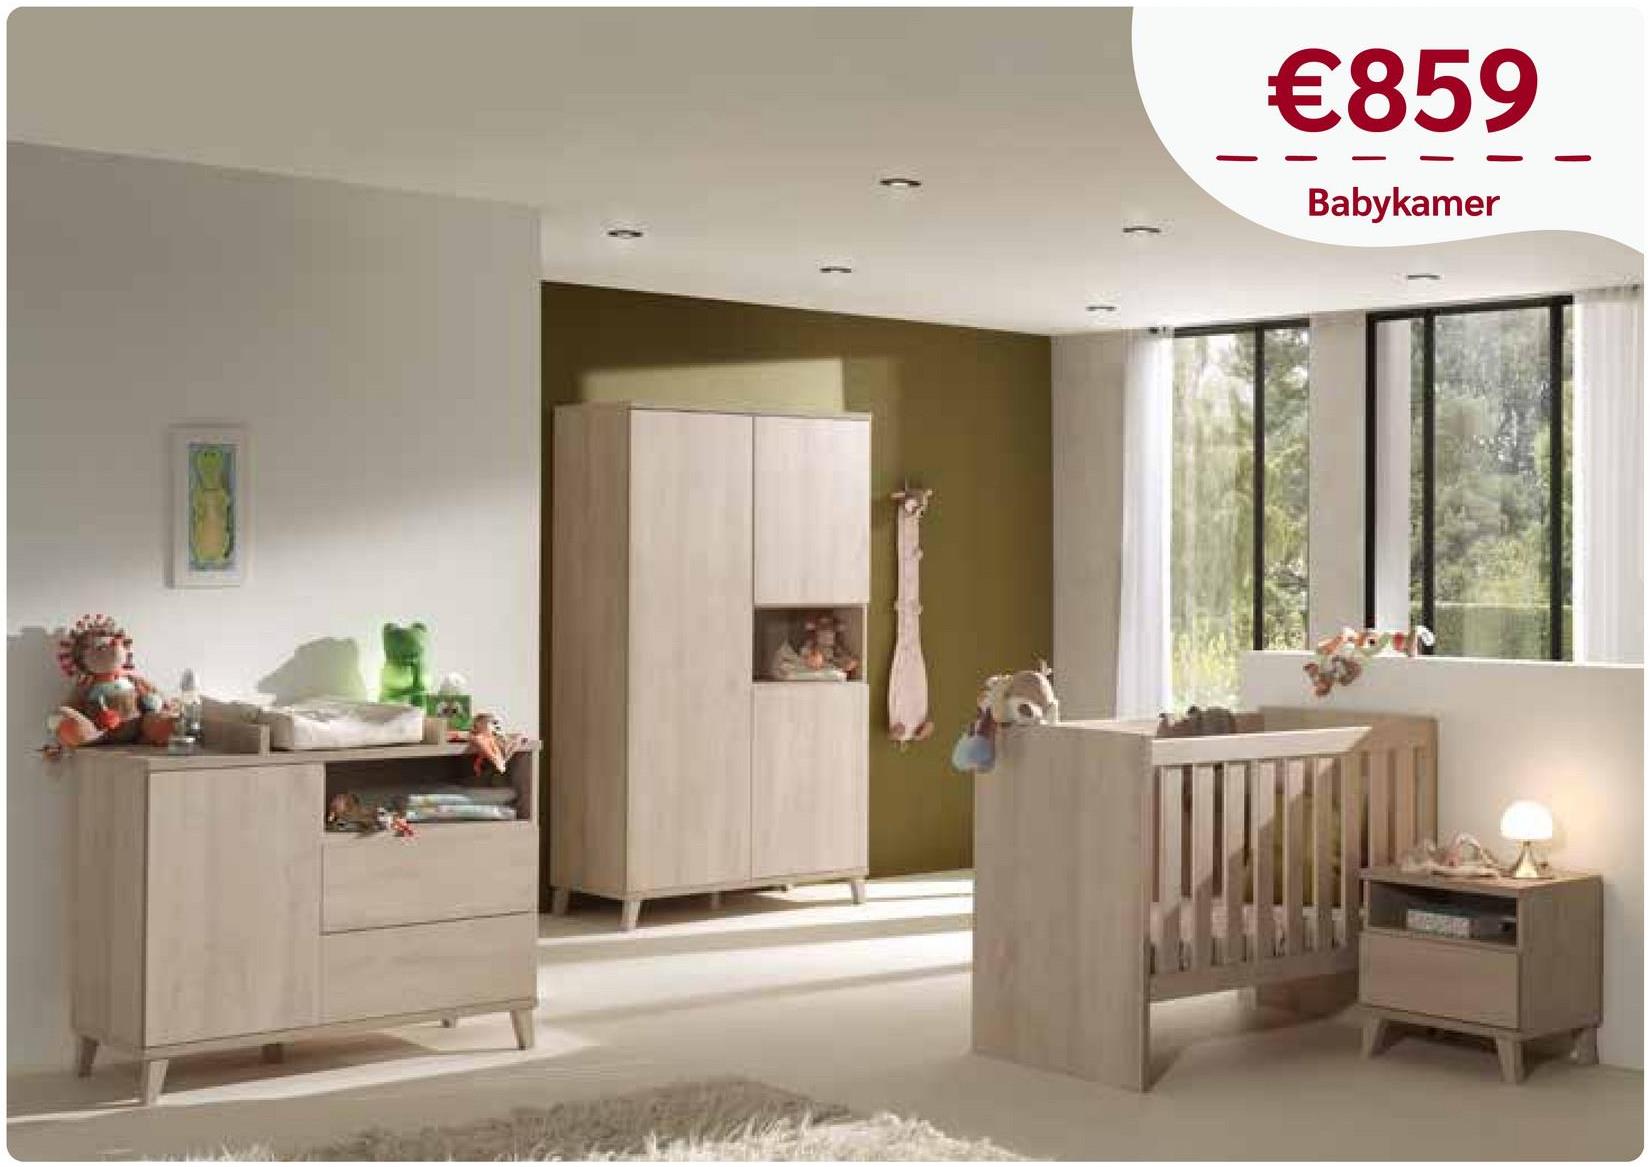 0
€859
Babykamer